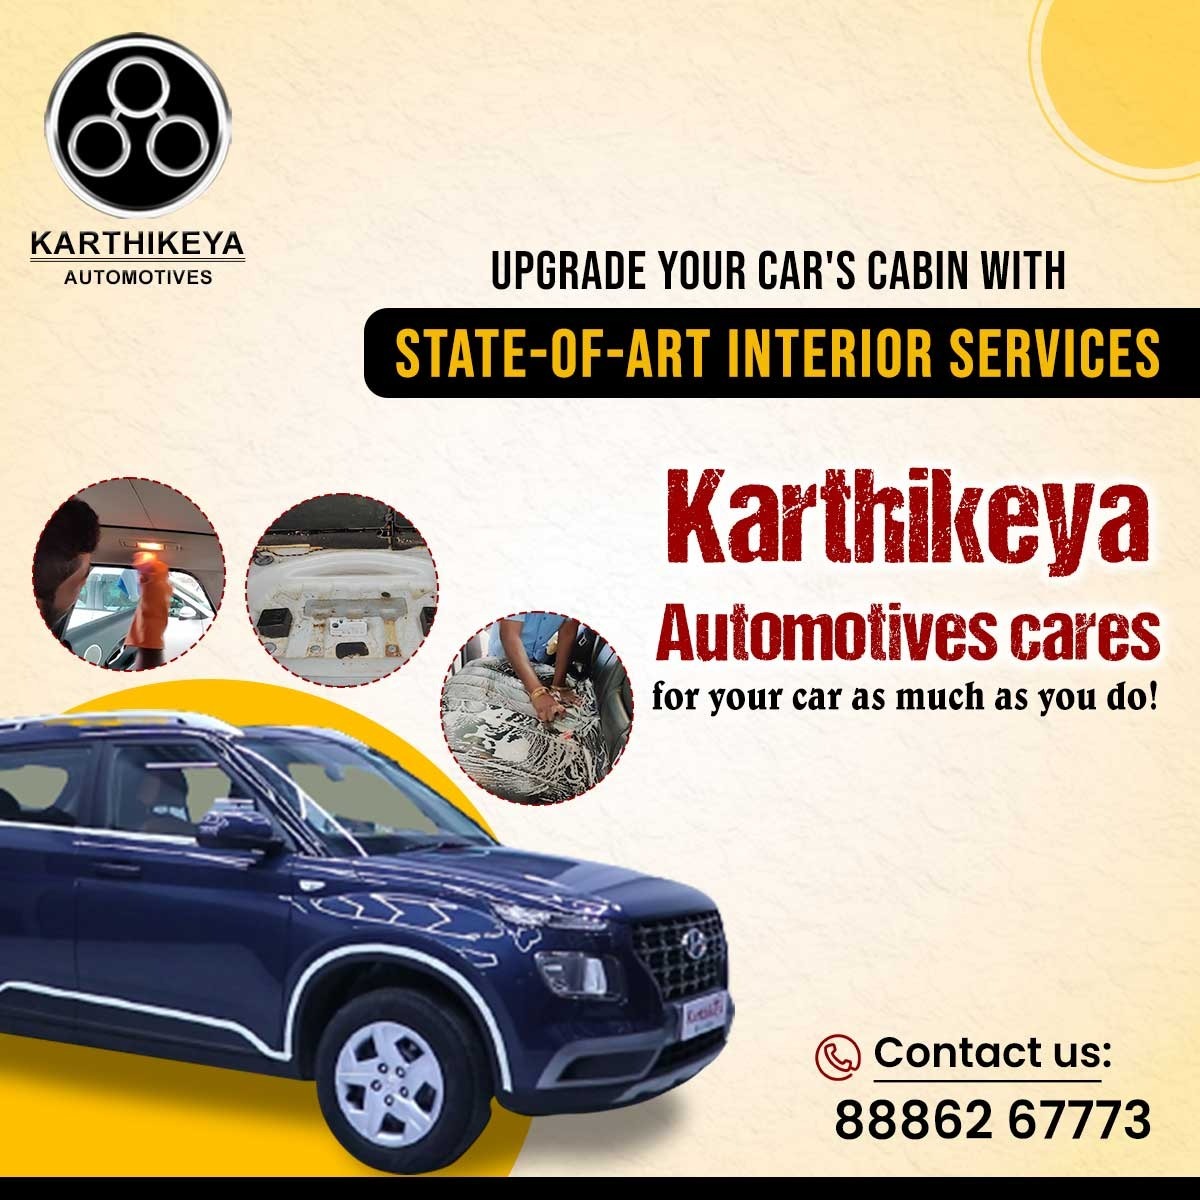 Upgrade your car's cabin with kartikeya automotives
Contact: 8886267773

#iglcoatings #Kartikeyaautomotives  #Coatings #ceramiccoatingCoating  #marinecoatings #industrialcoatings #Carcleaning #CarCareSolutions #carwash #UltimateDetailing #ReflectPerfection #luxurydetailingiling